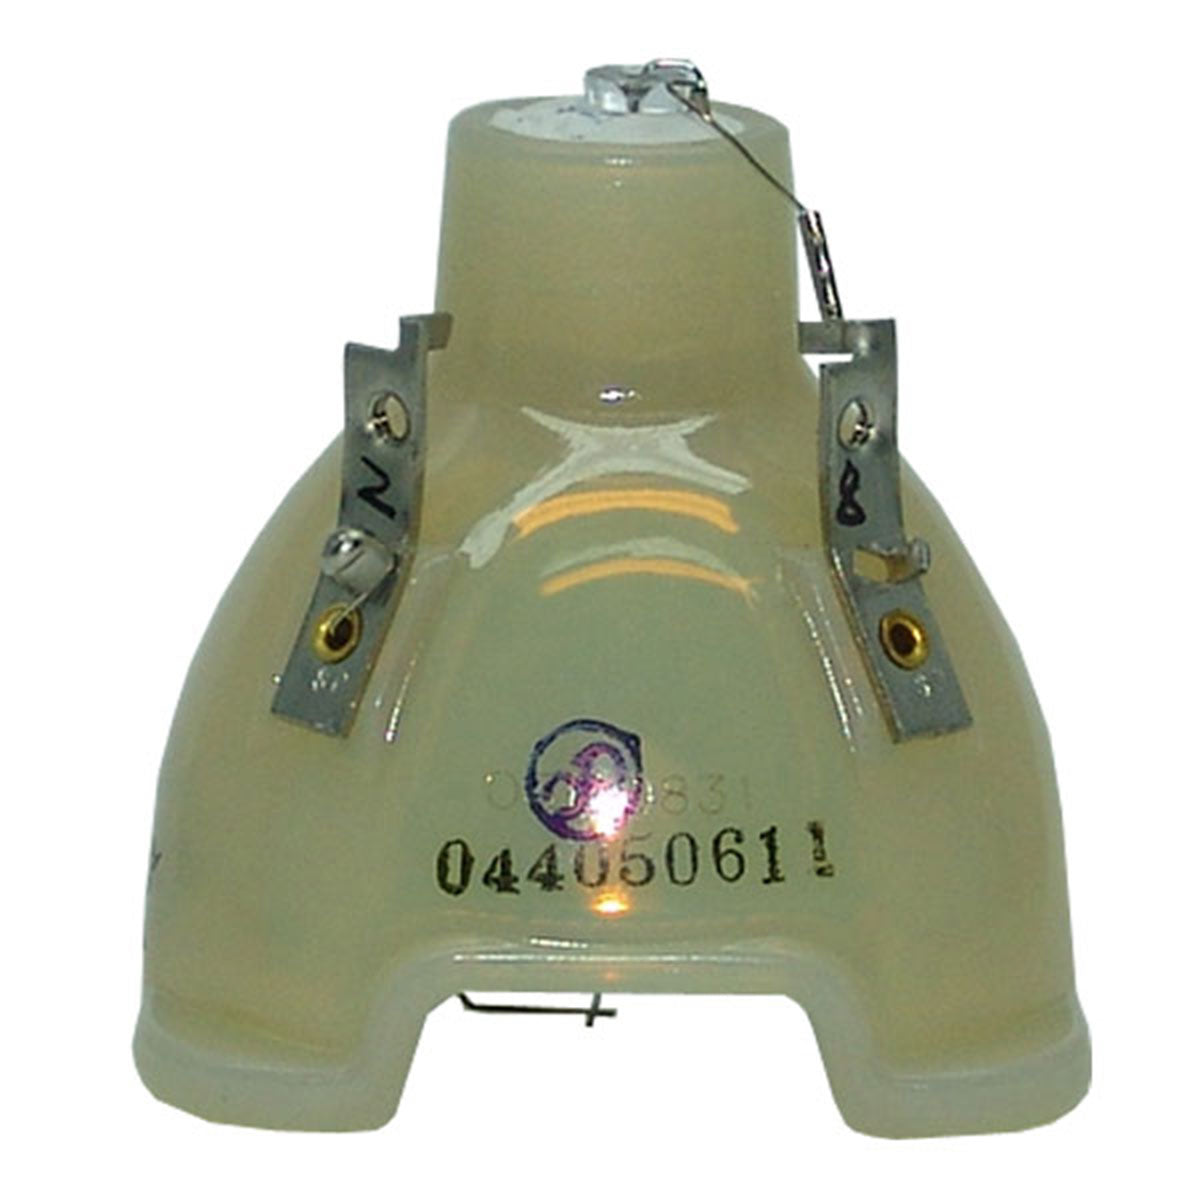 Vivitek 1000042-A Philips Projector Bare Lamp